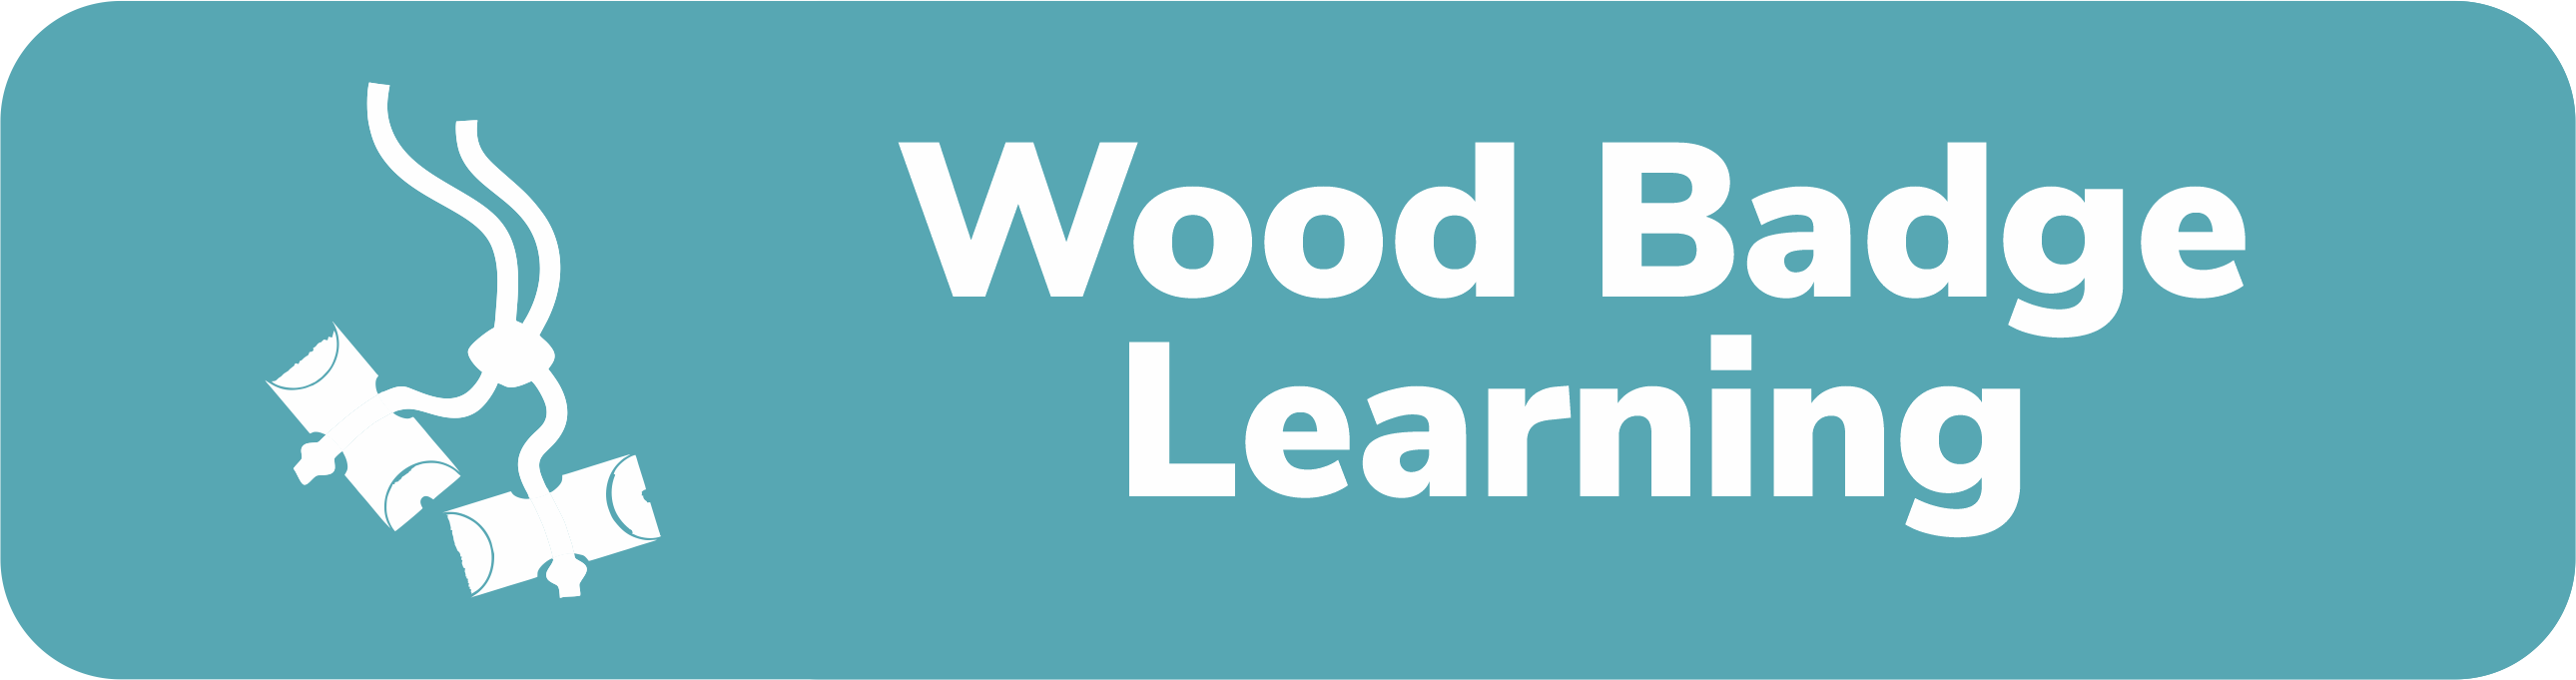 Wood Badge Learning 